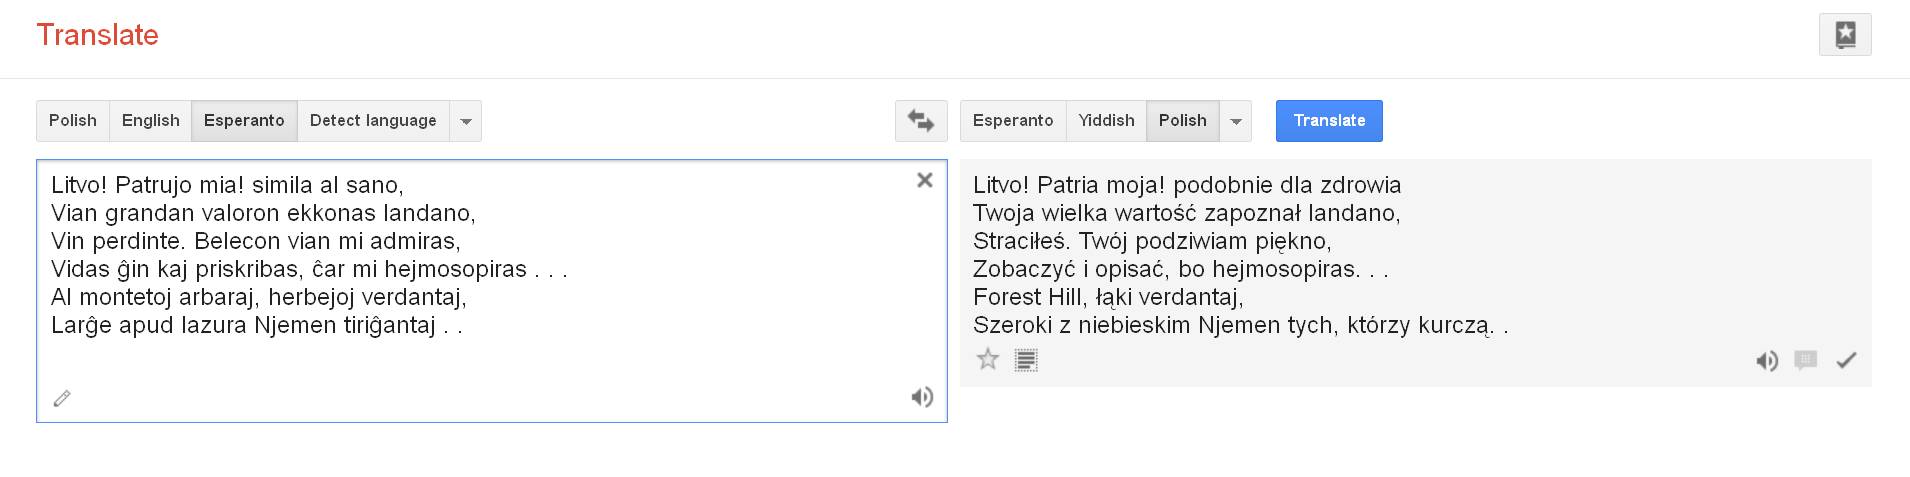 Google Translate Esperanto Pan Tadeusz